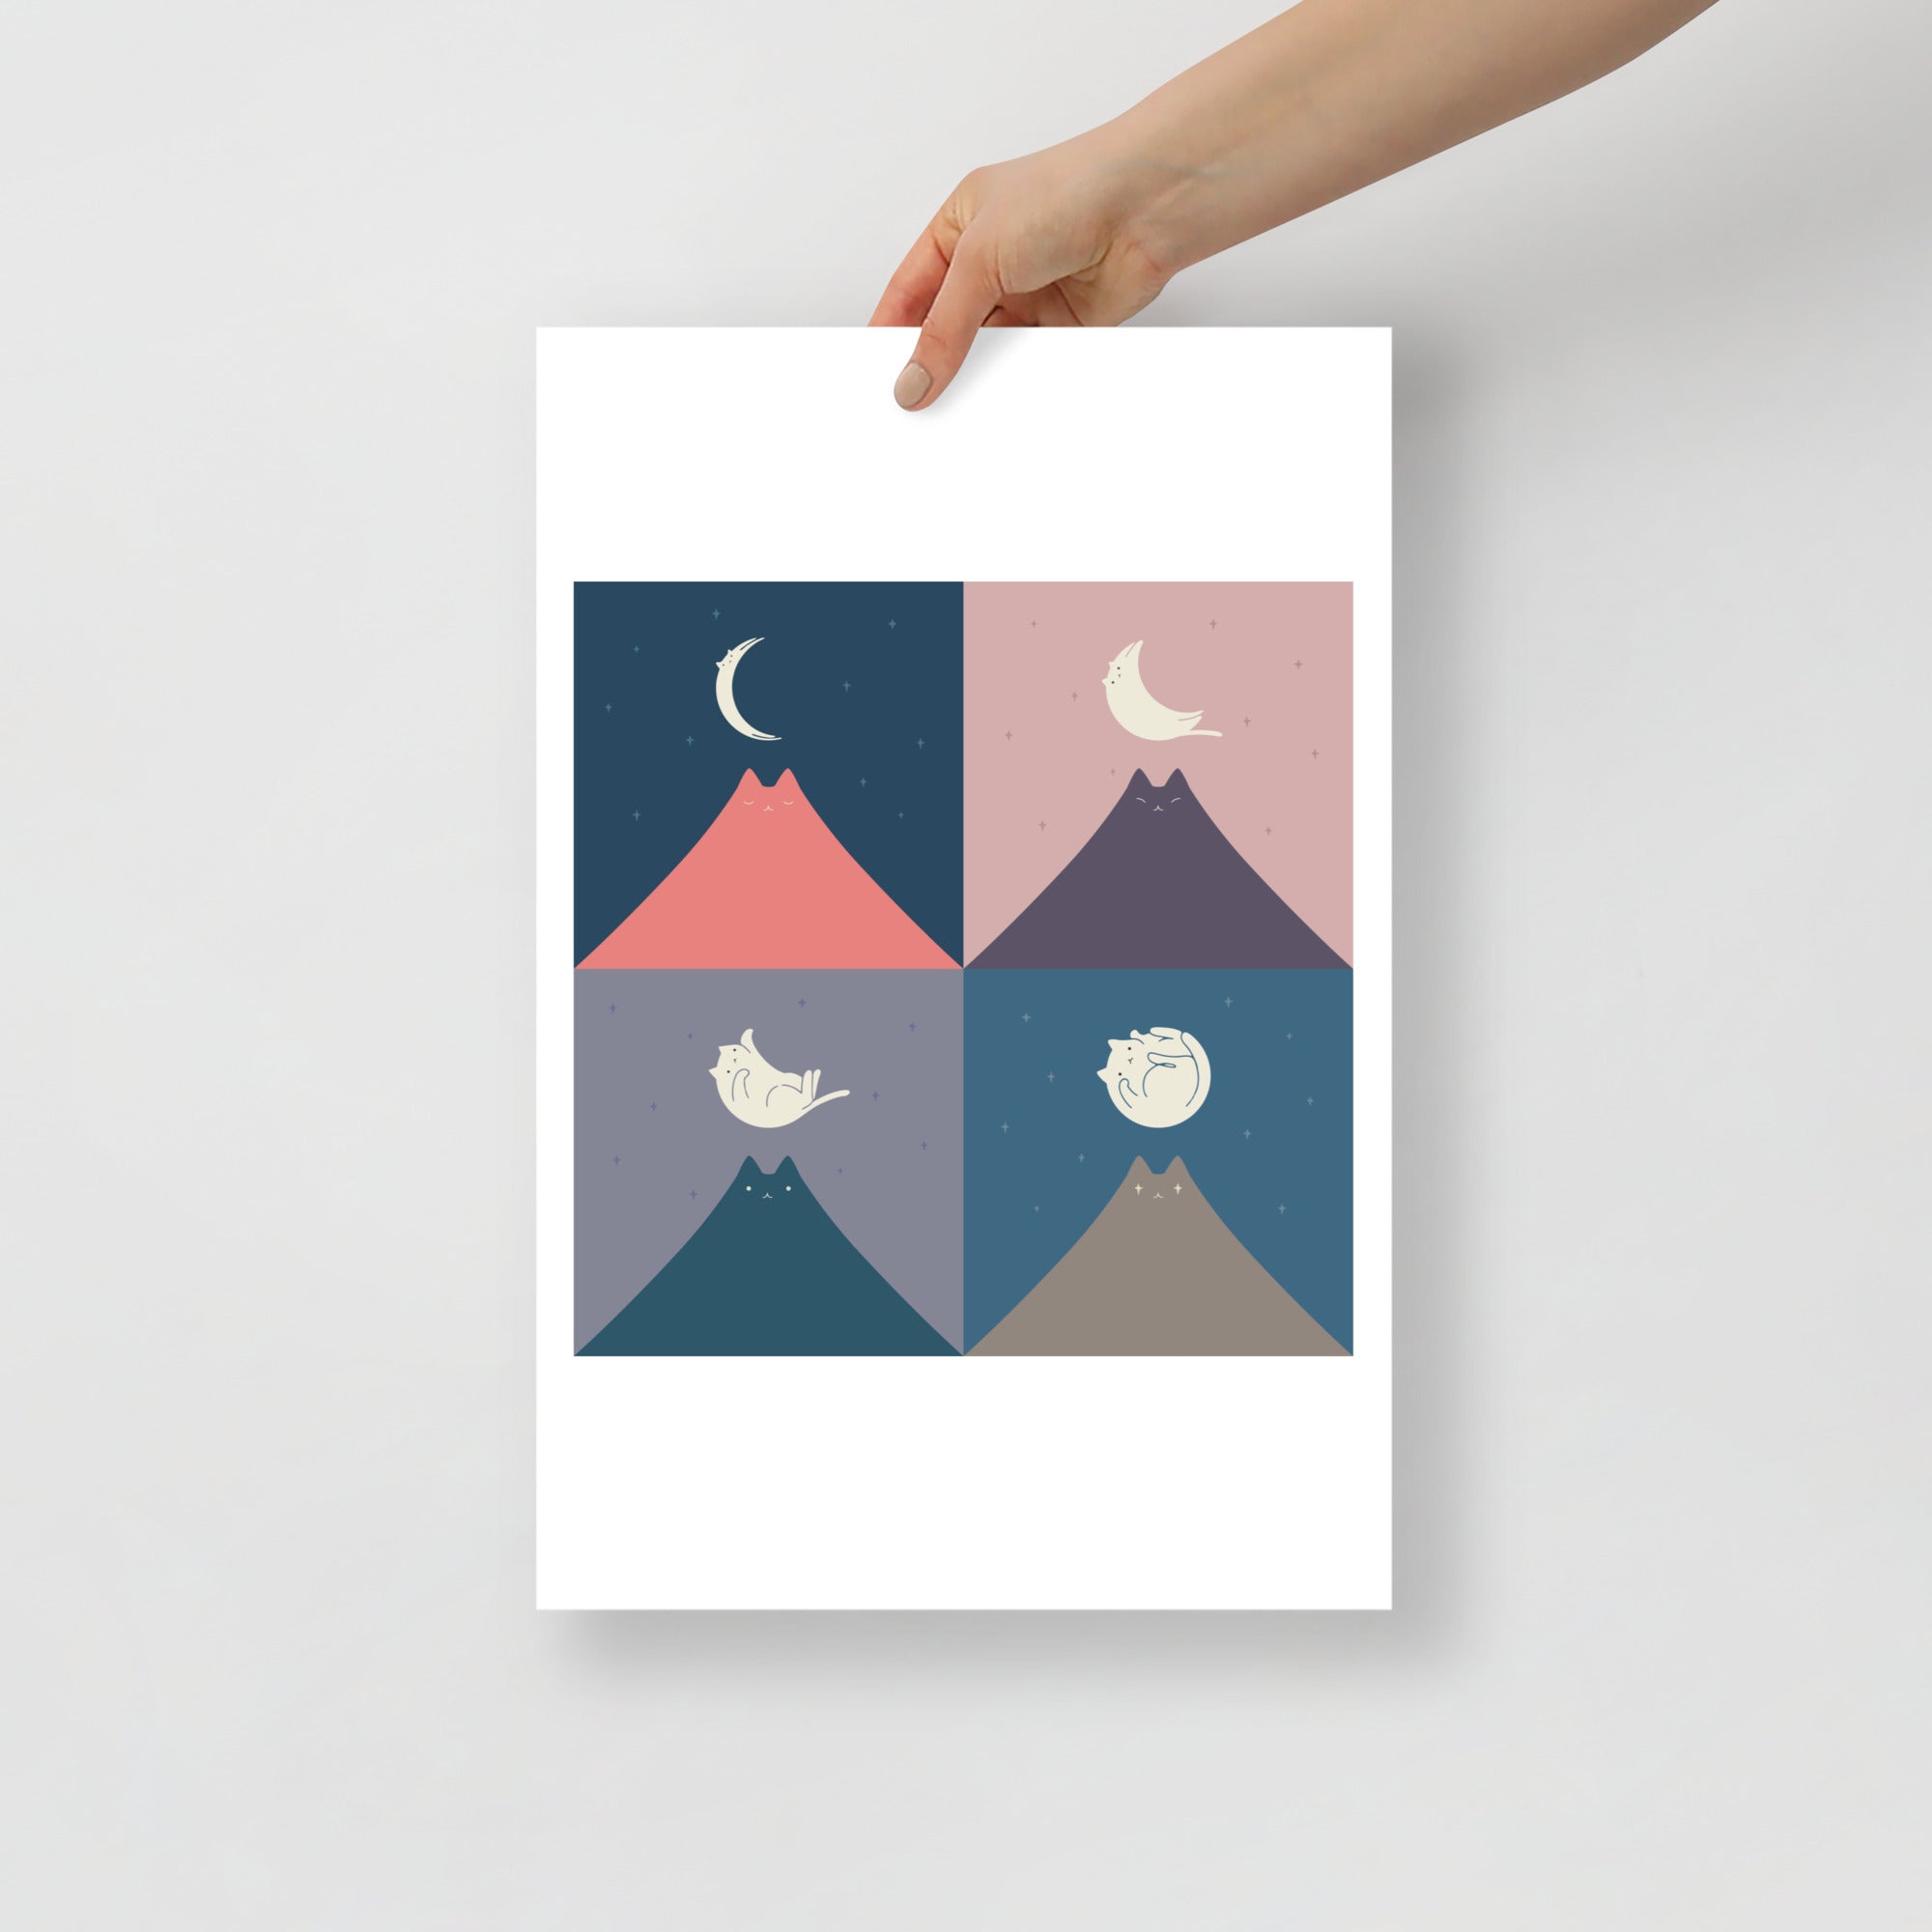 Cat Moon 2x2 - Art print